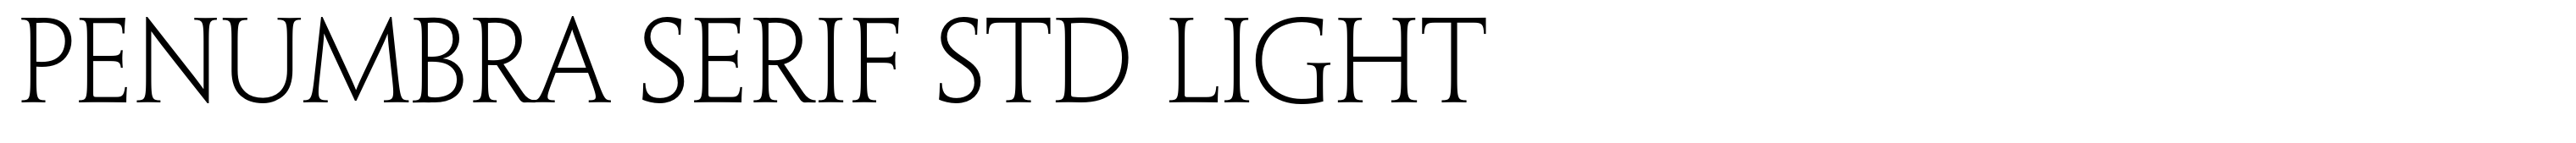 Penumbra Serif Std Light